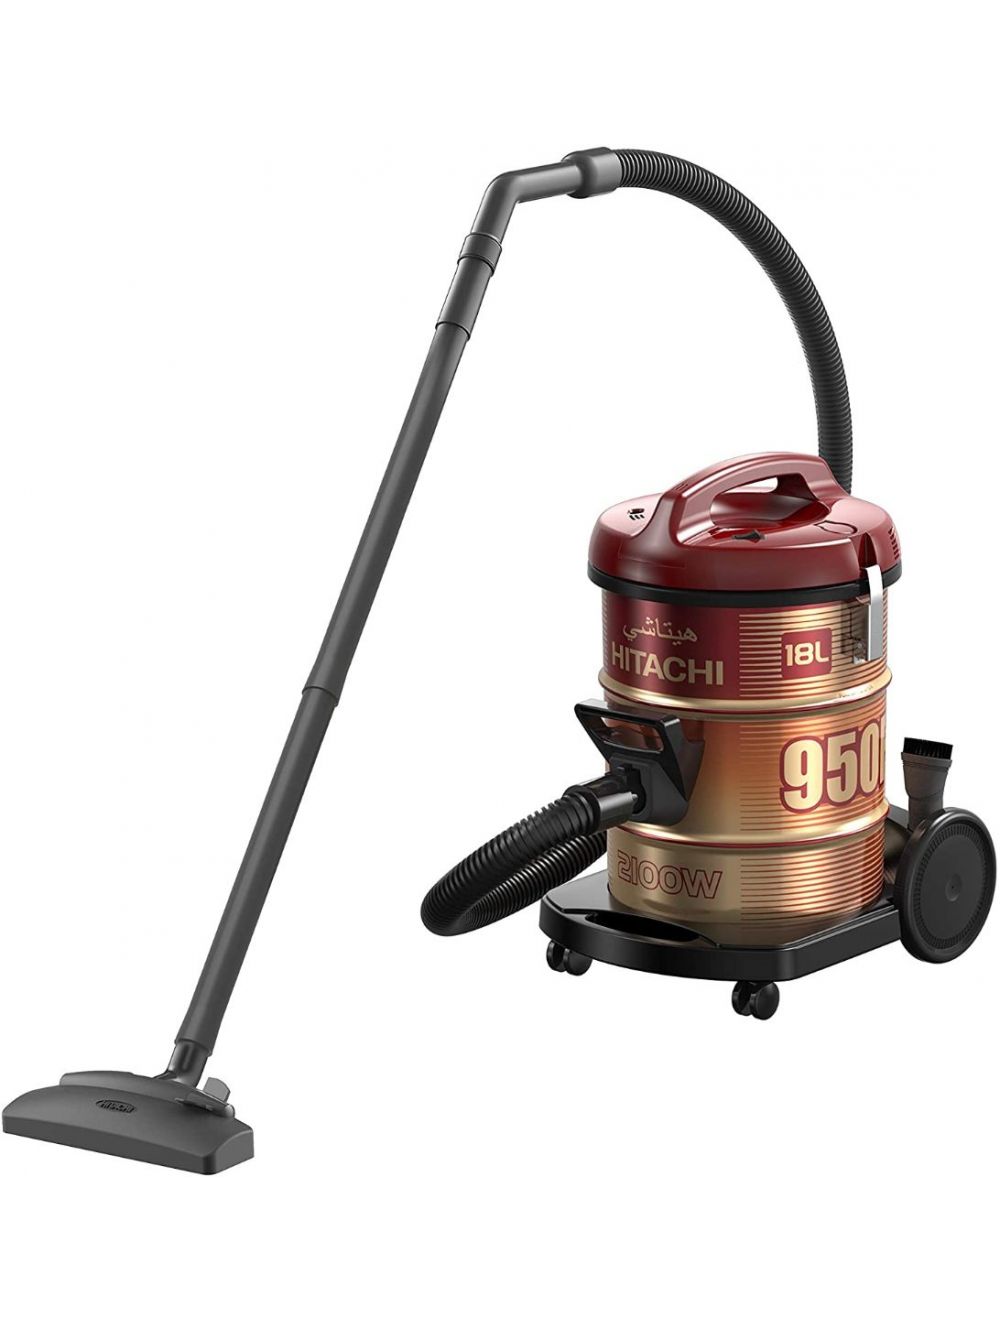 Hitachi Drum Vacuum Cleaner 2100 Watts, Wine Red-CV950F24CBSWR/SBK